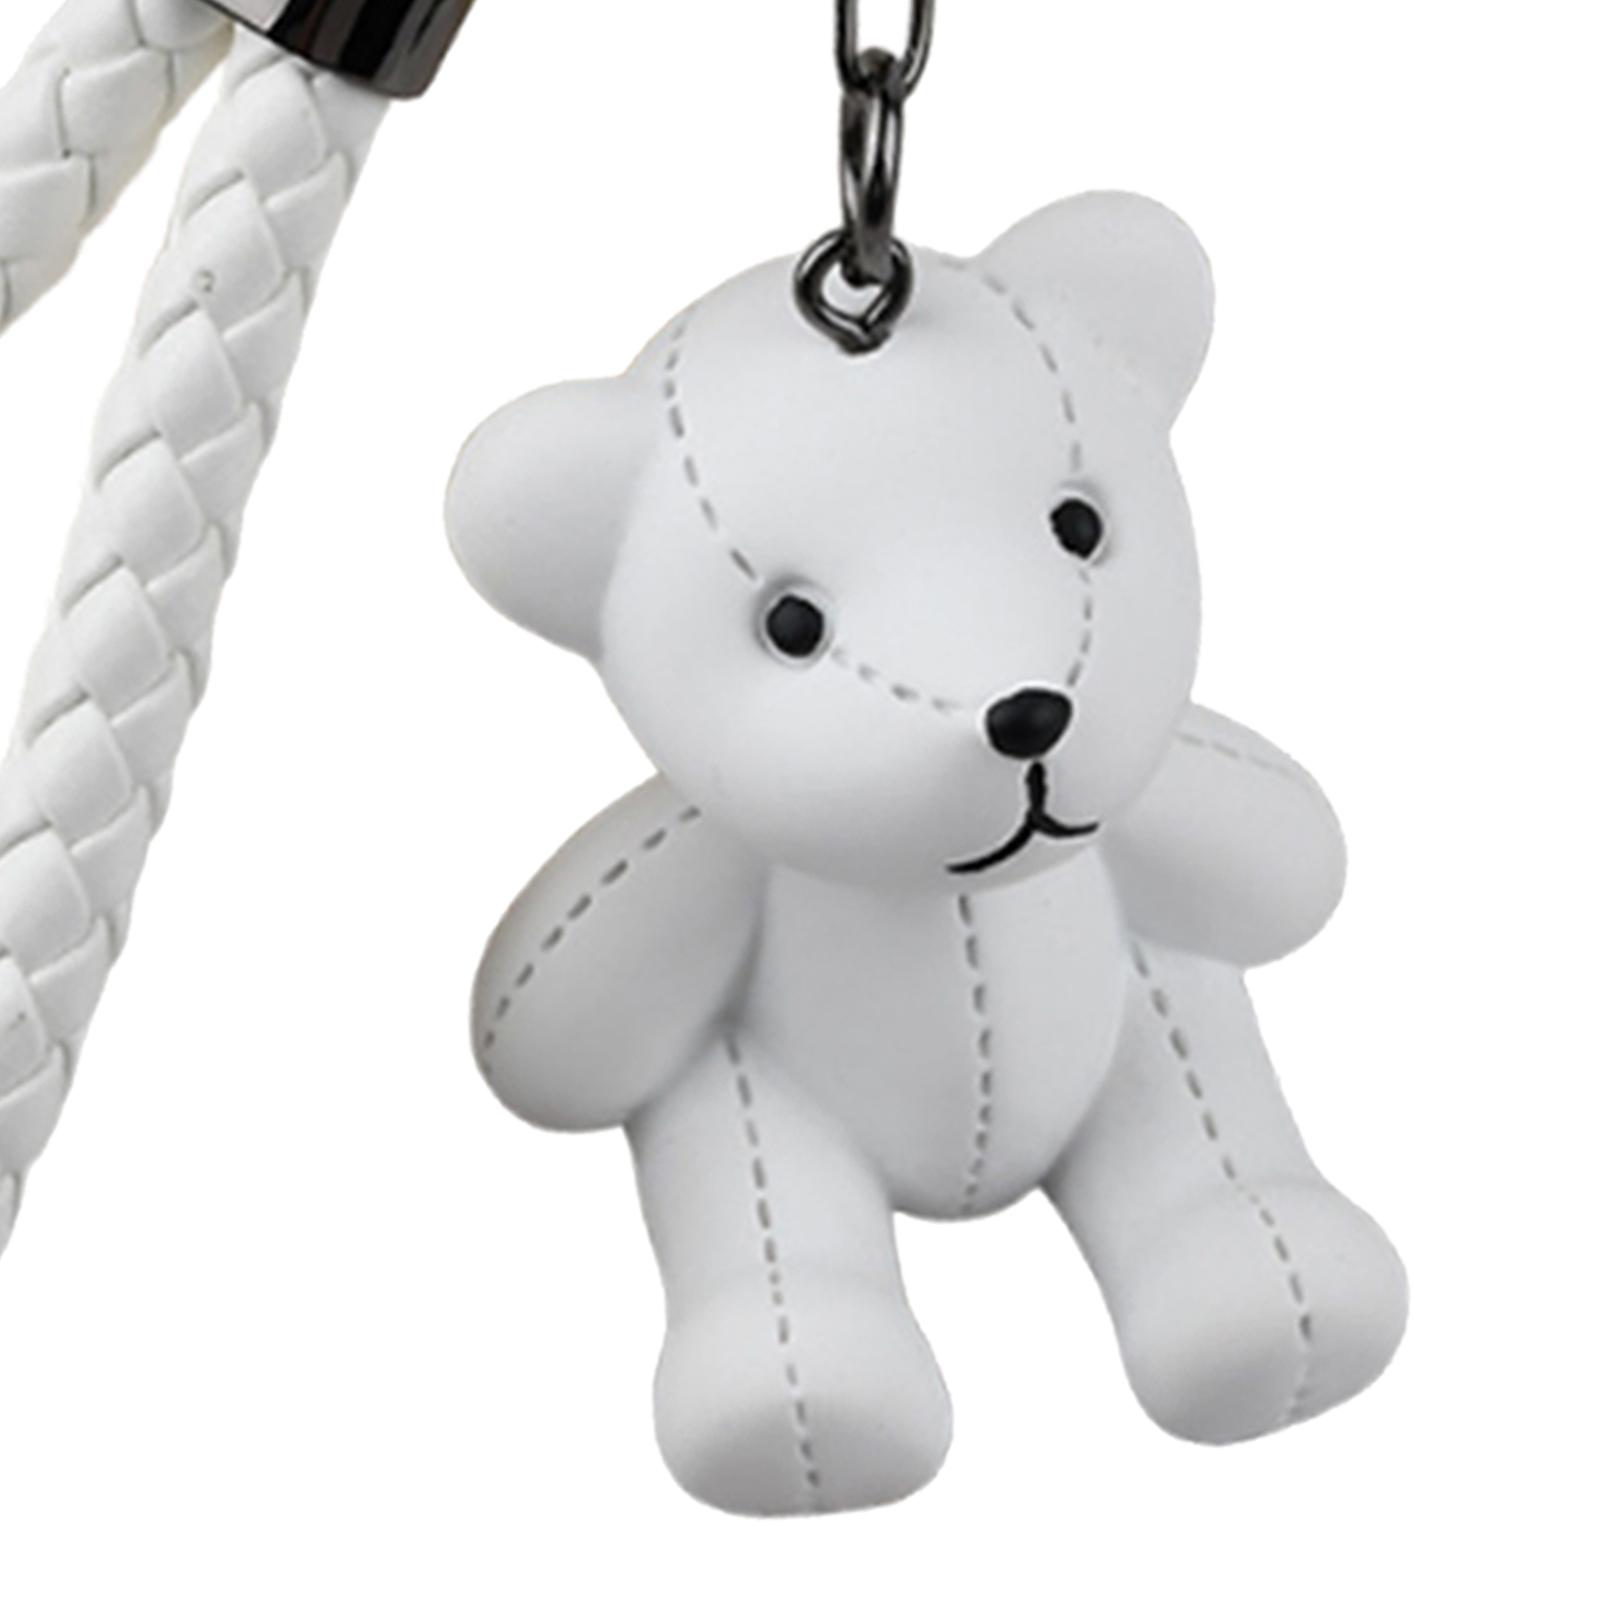 Bear Key Chain Pendant Resin Animal Pendant Creative Gift Car Bag Keychain White